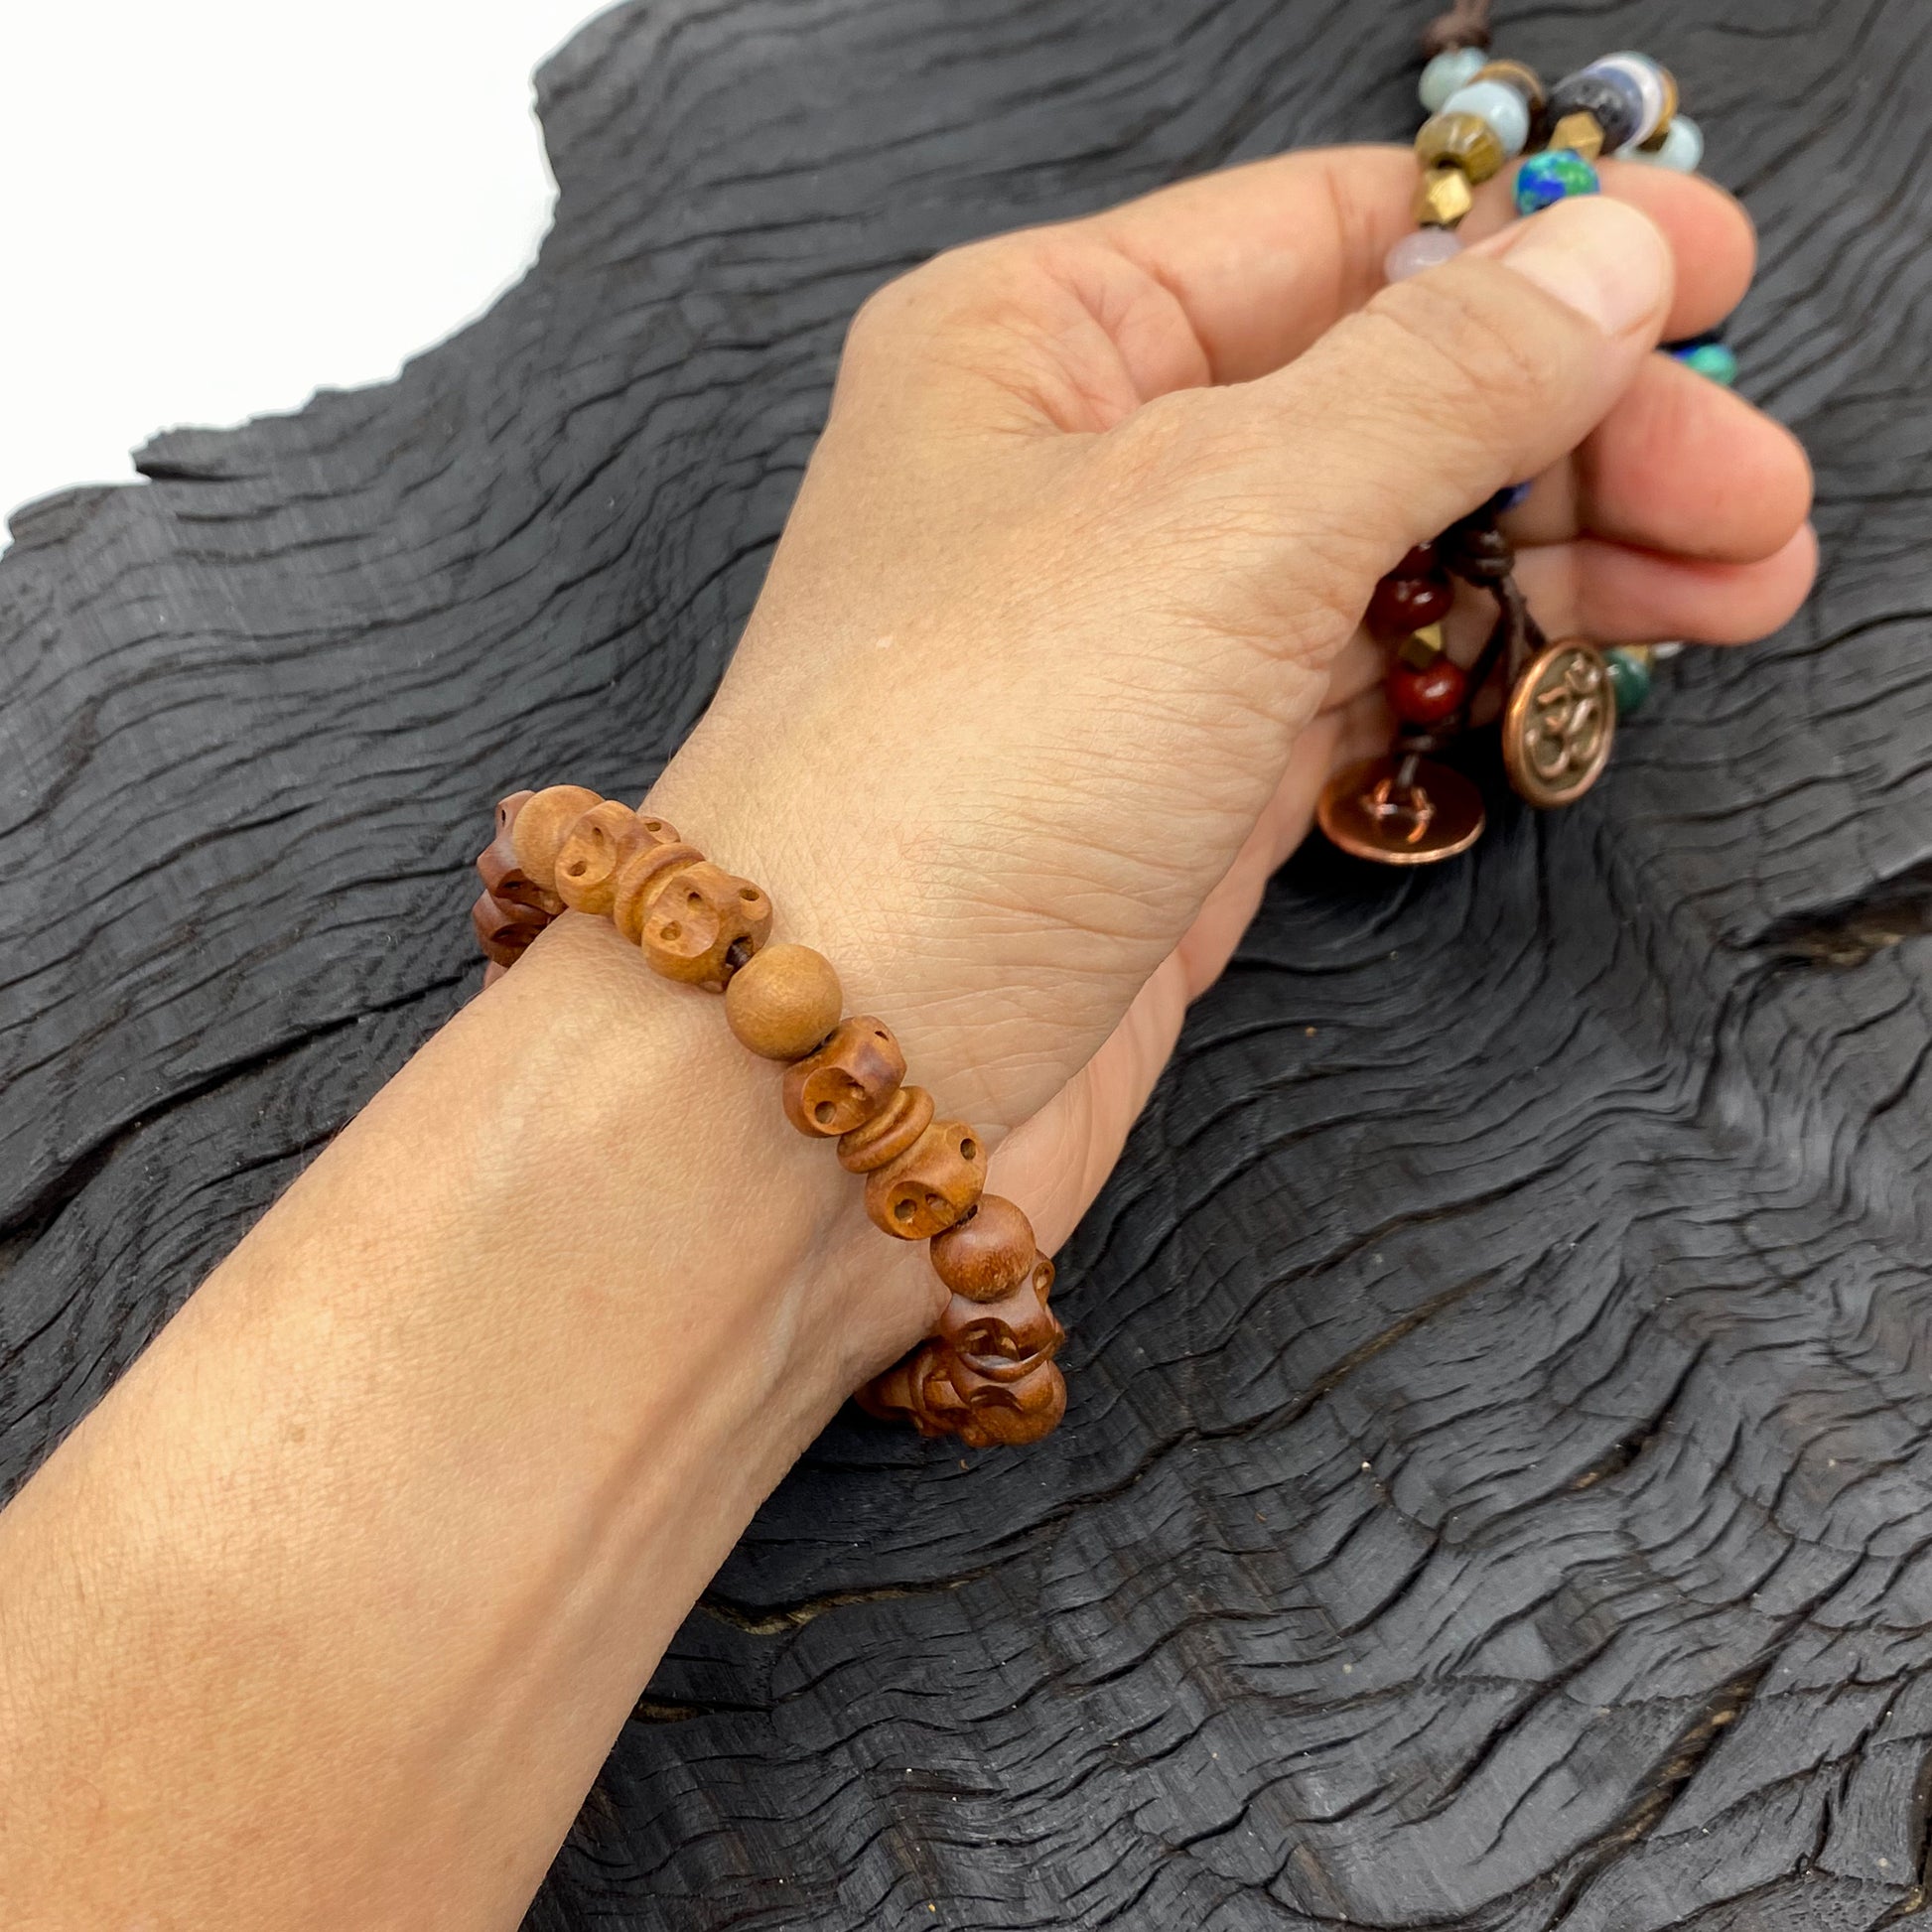 Wrist Mala with Dorje (thunderbolt) - 8mm Wood Beads